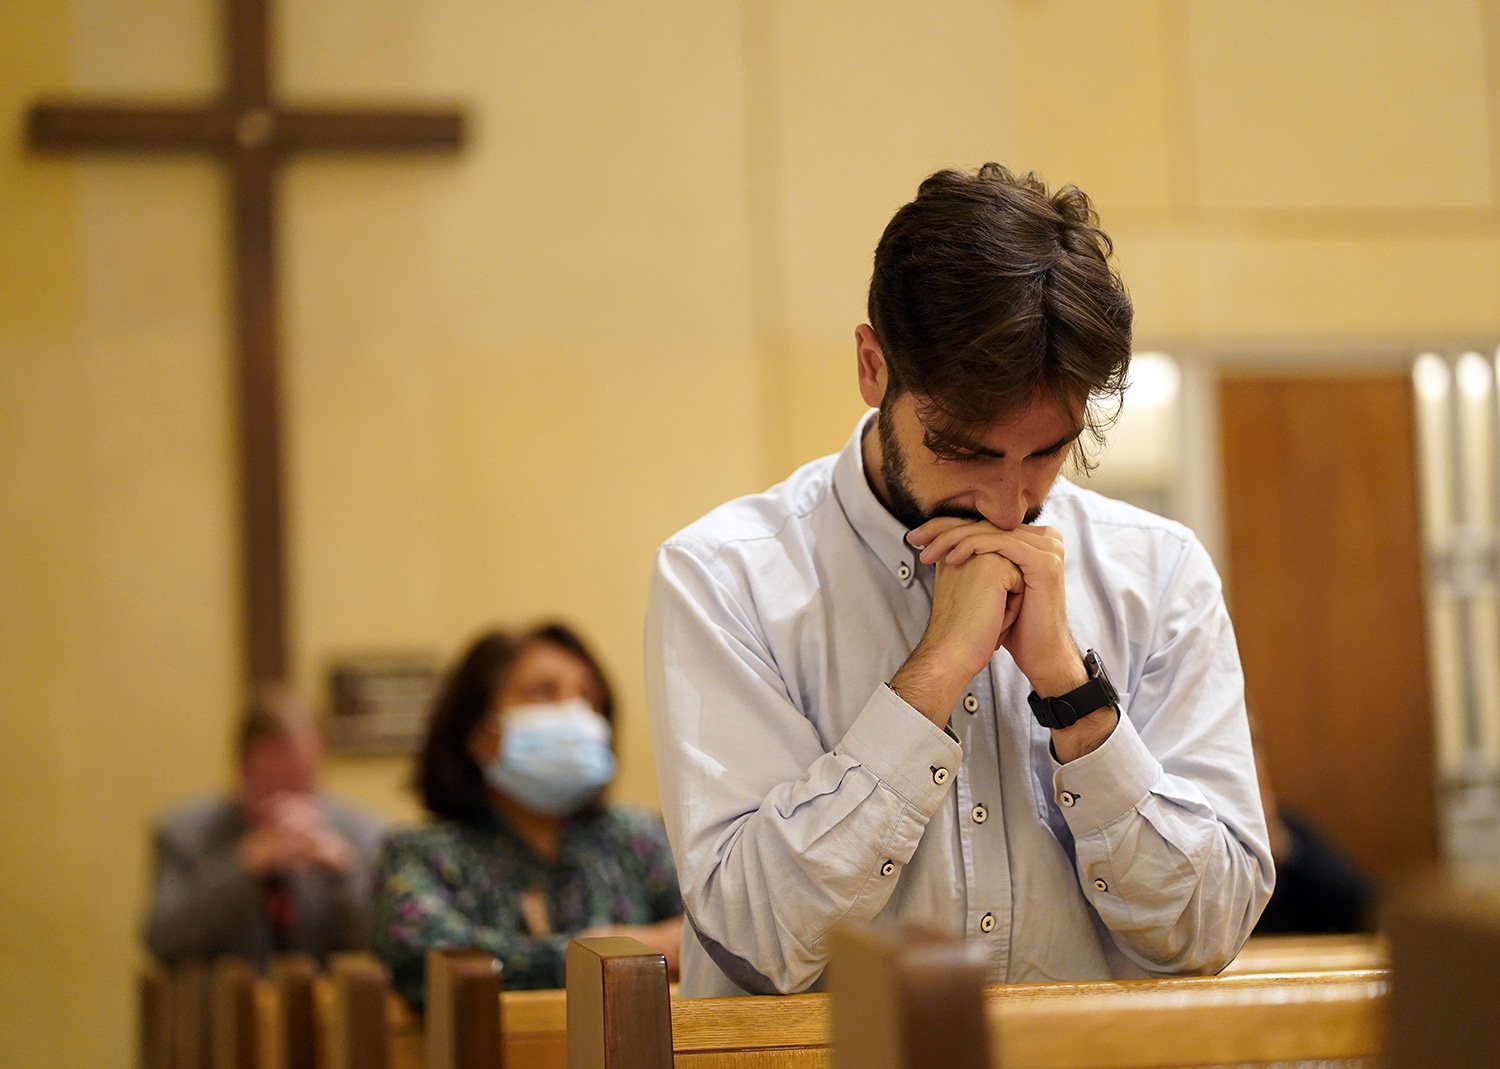 PRAYING DURING MASS NEW YORK CATHOLIC CHURCH